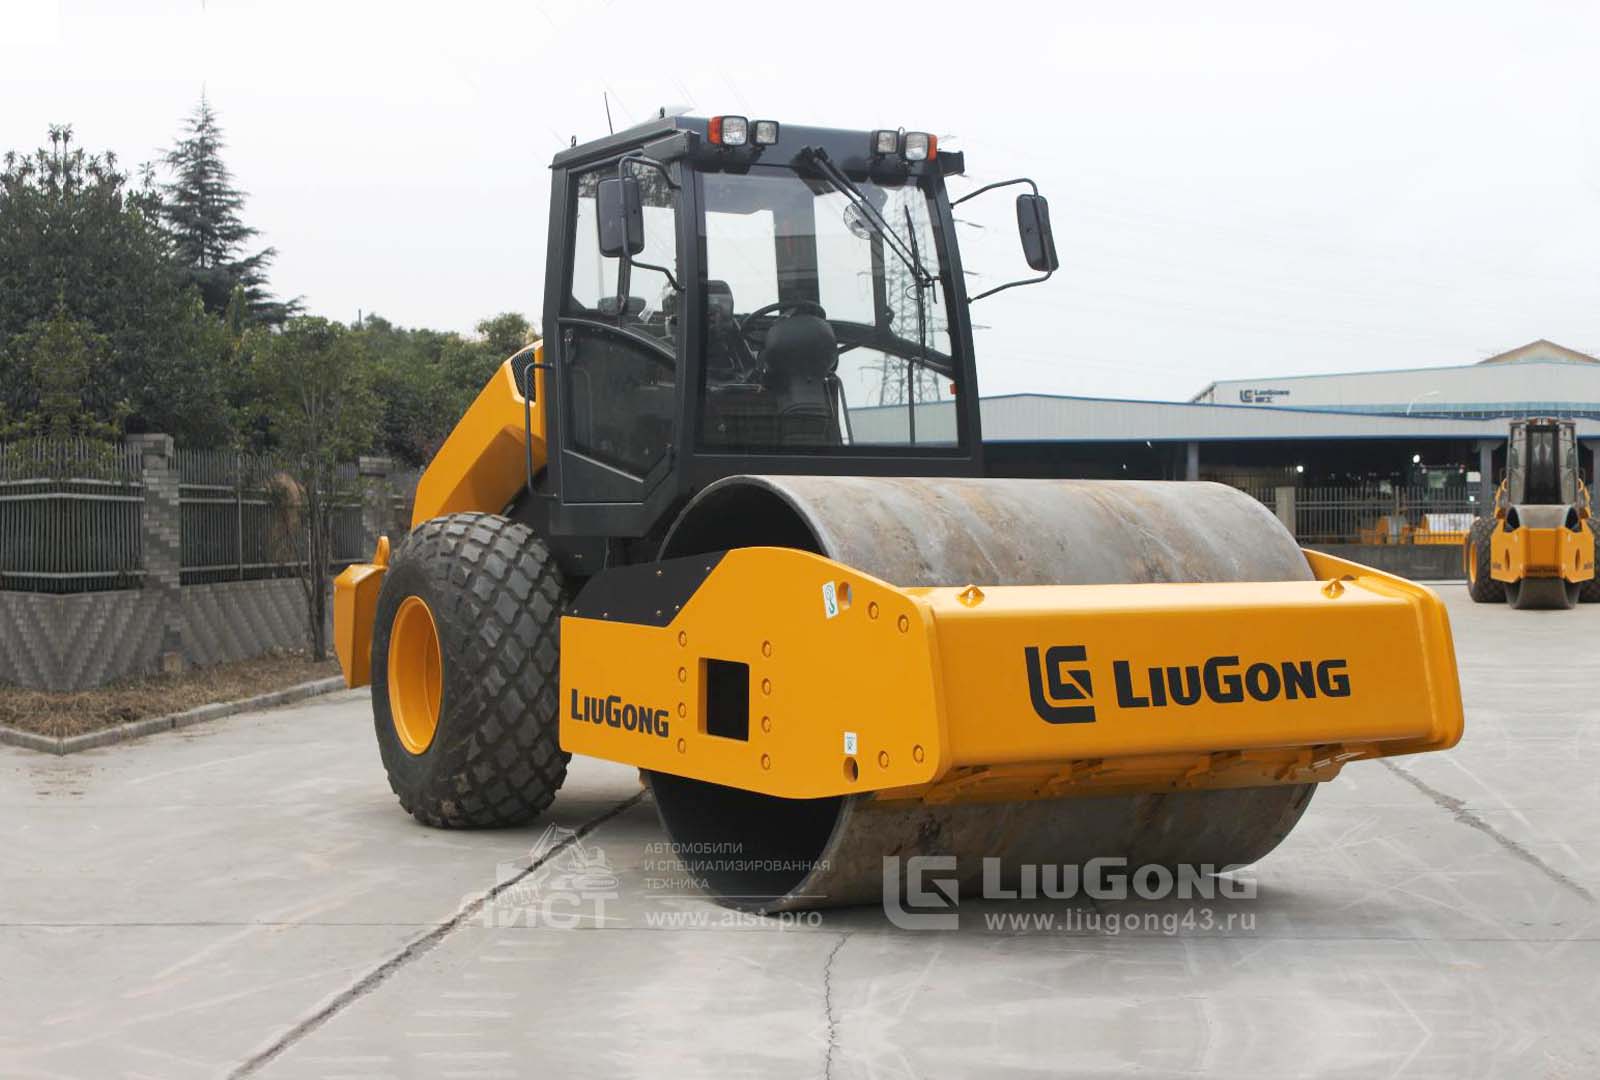   LiuGong CLG 6620